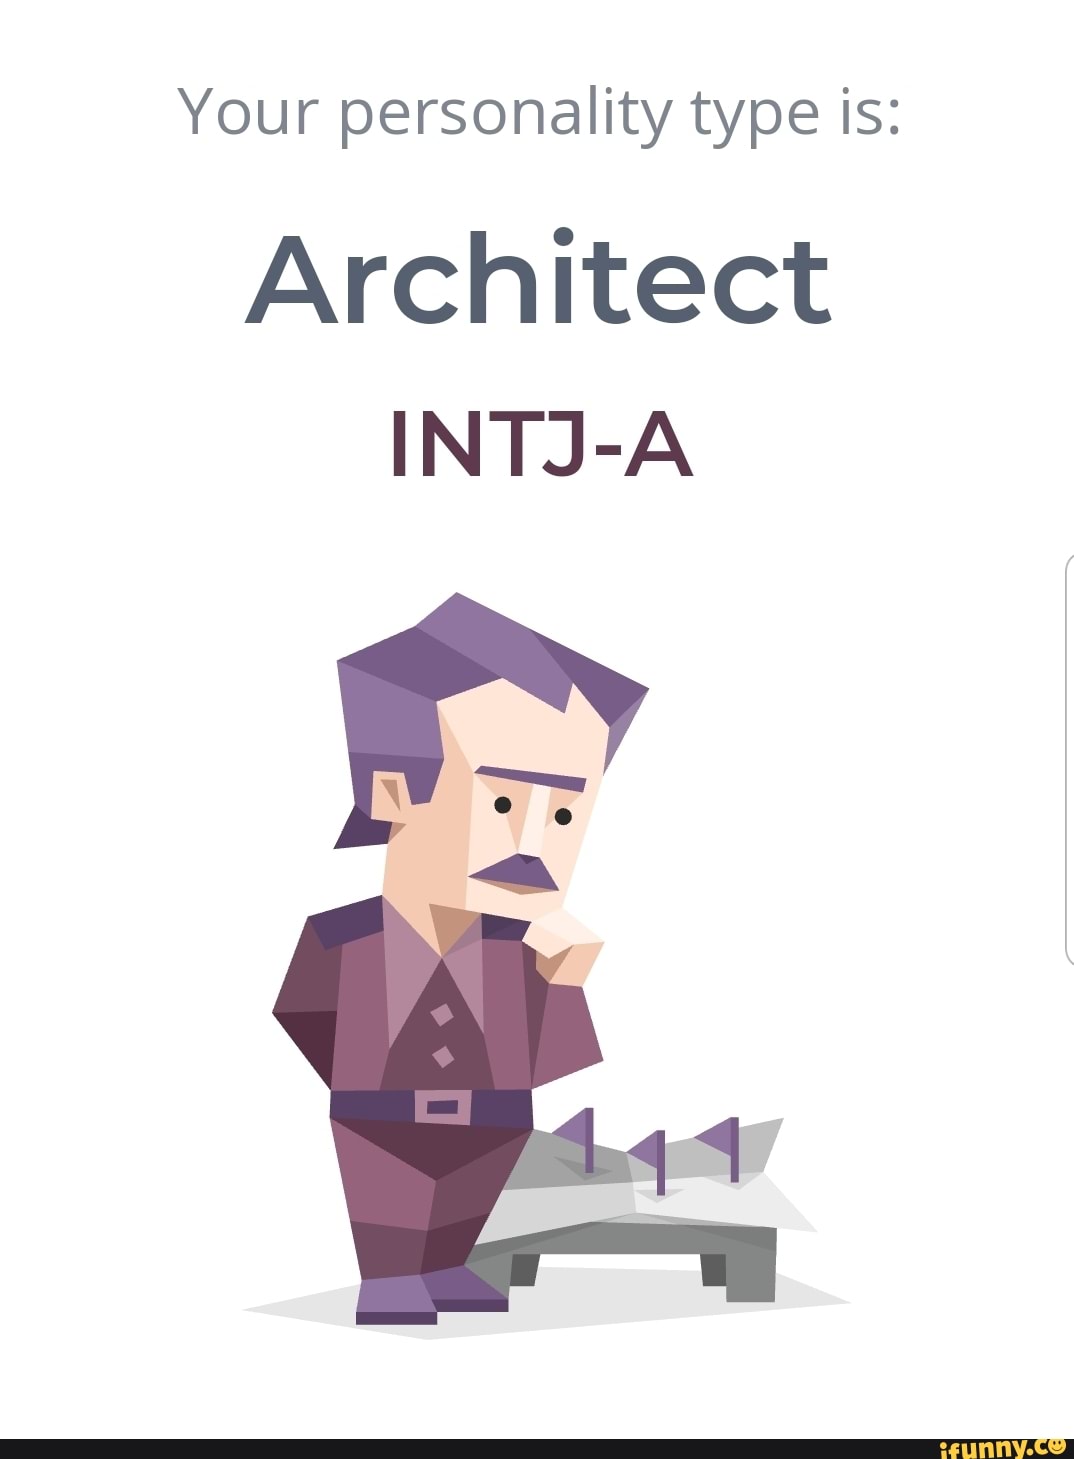 Architect personality type - mertqmx